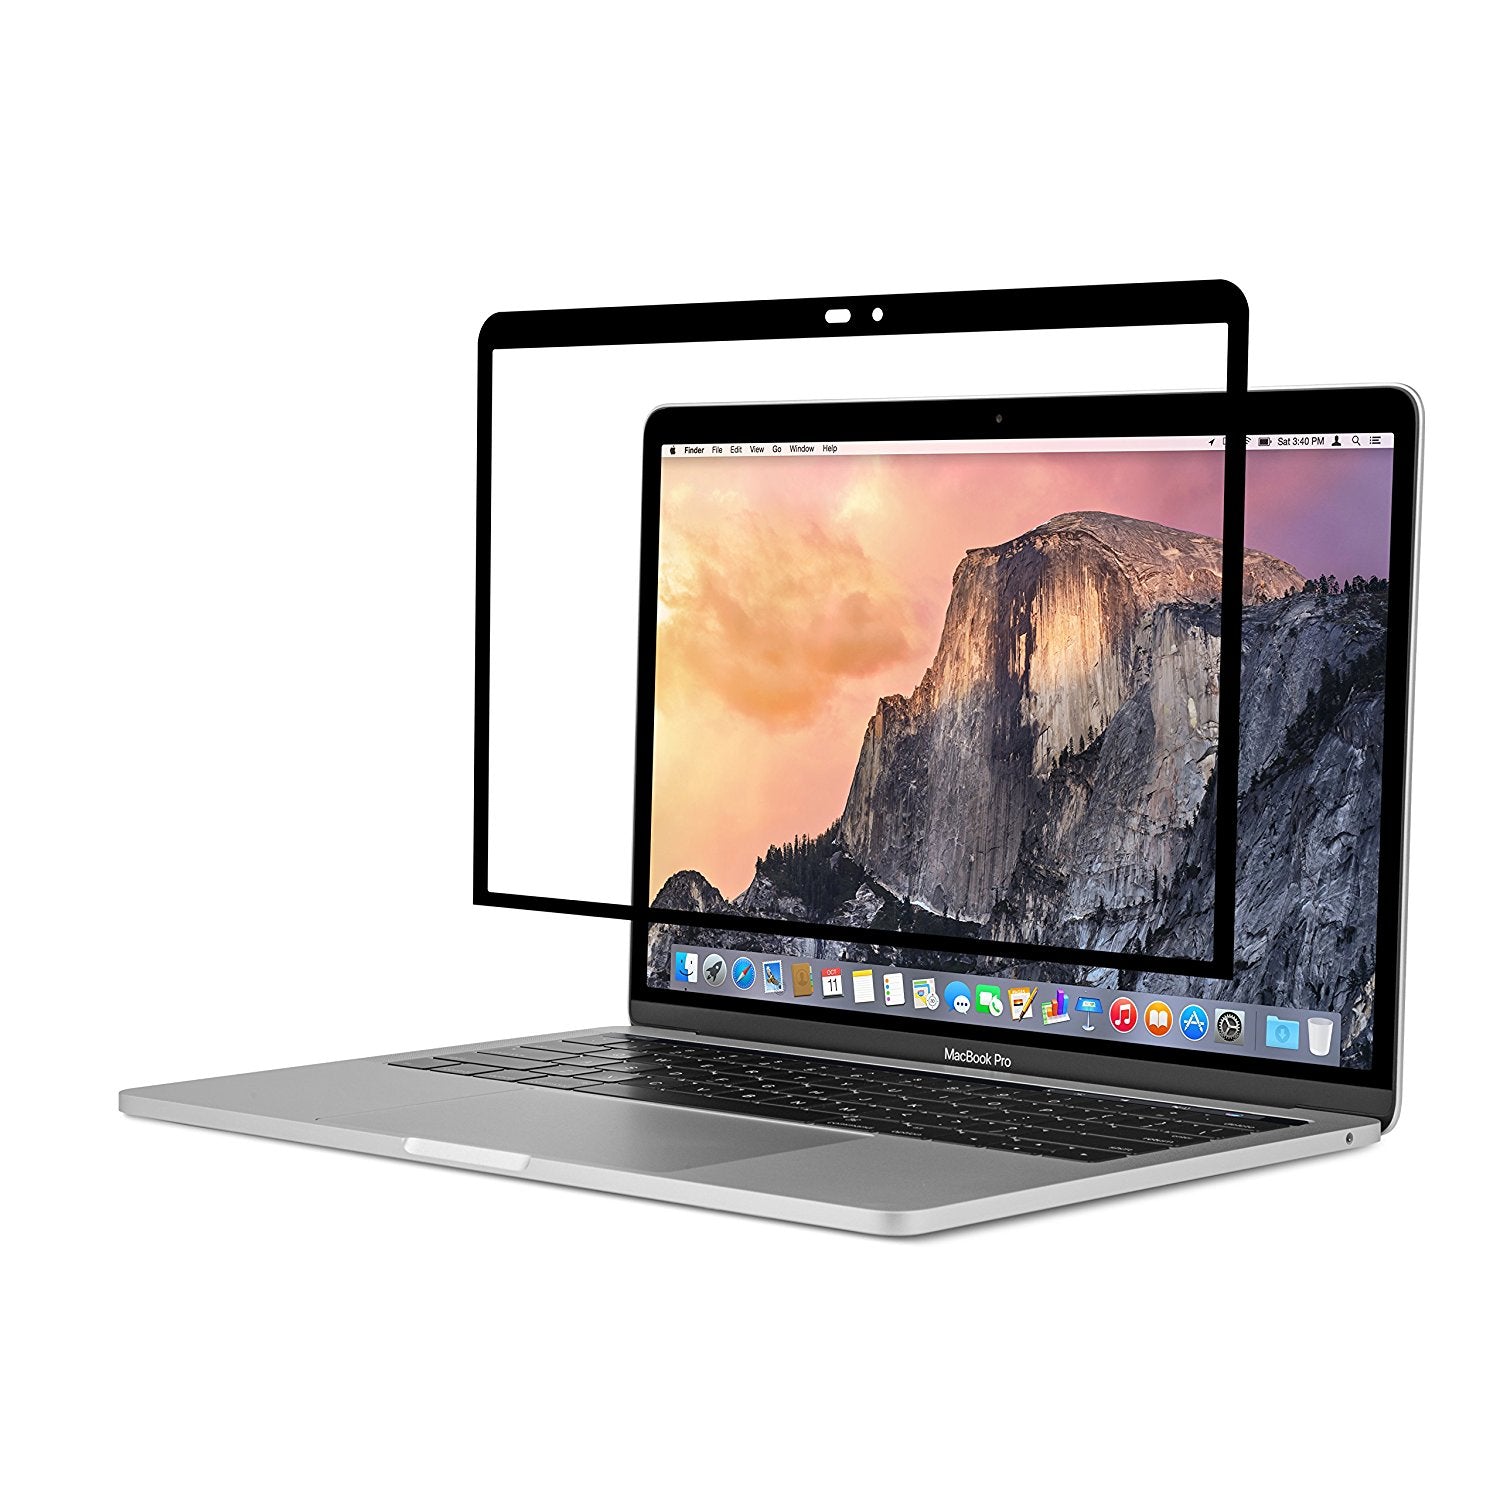 MacBook Case Set - 360 Pastel-Leaves - colourbanana